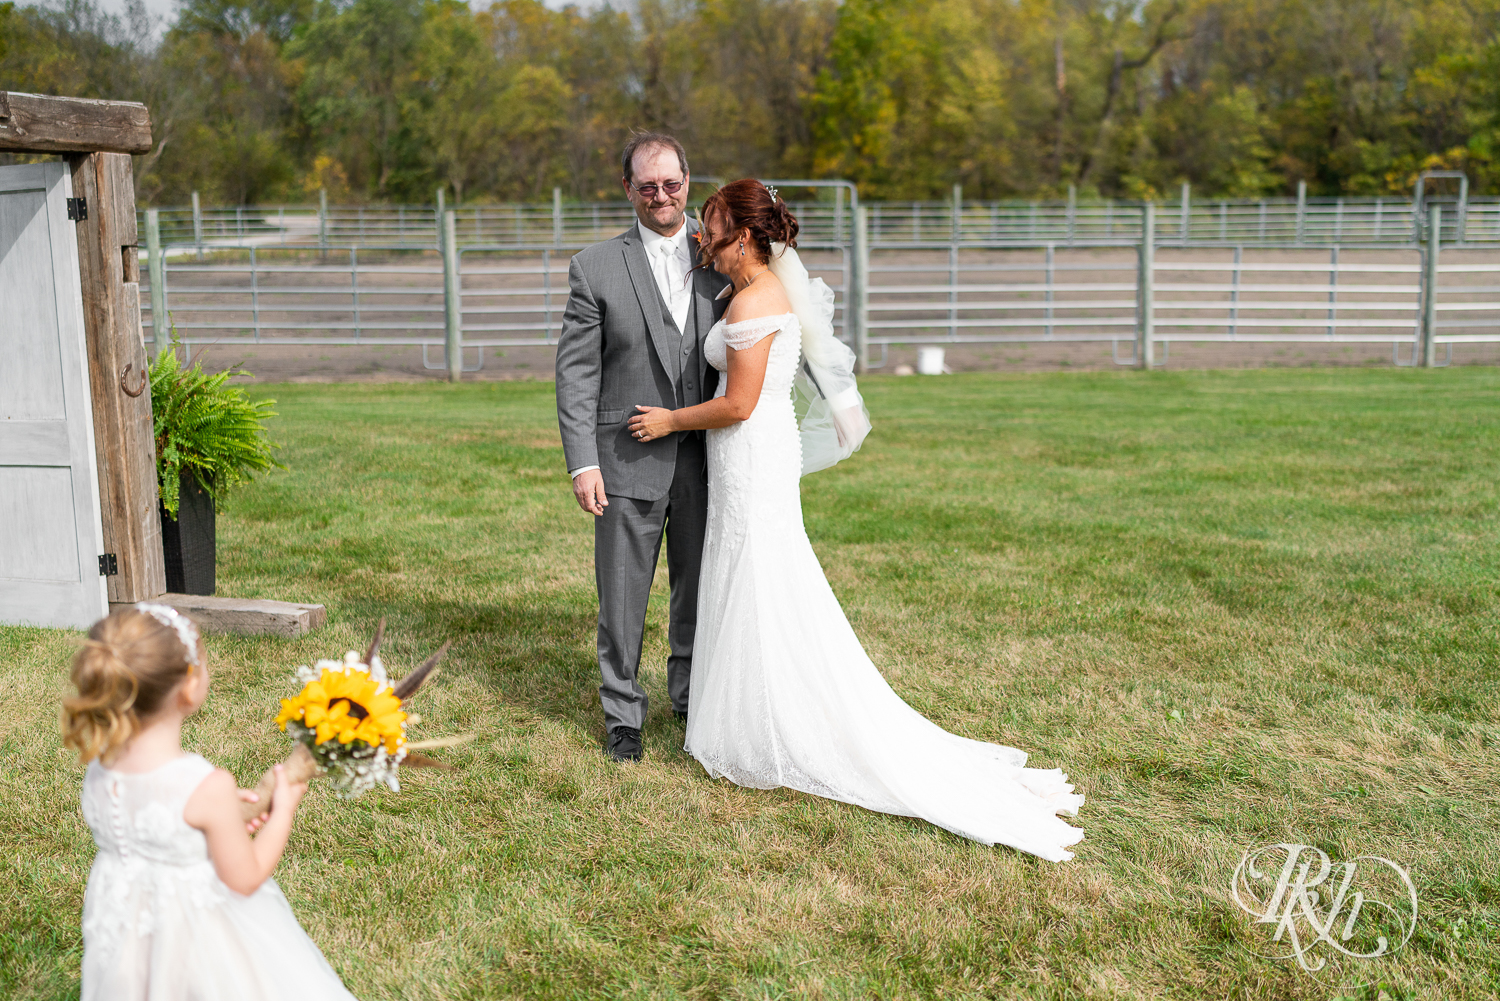 First look between bride and groom at Barn at Crocker's Creek in Faribault, Minnesota.